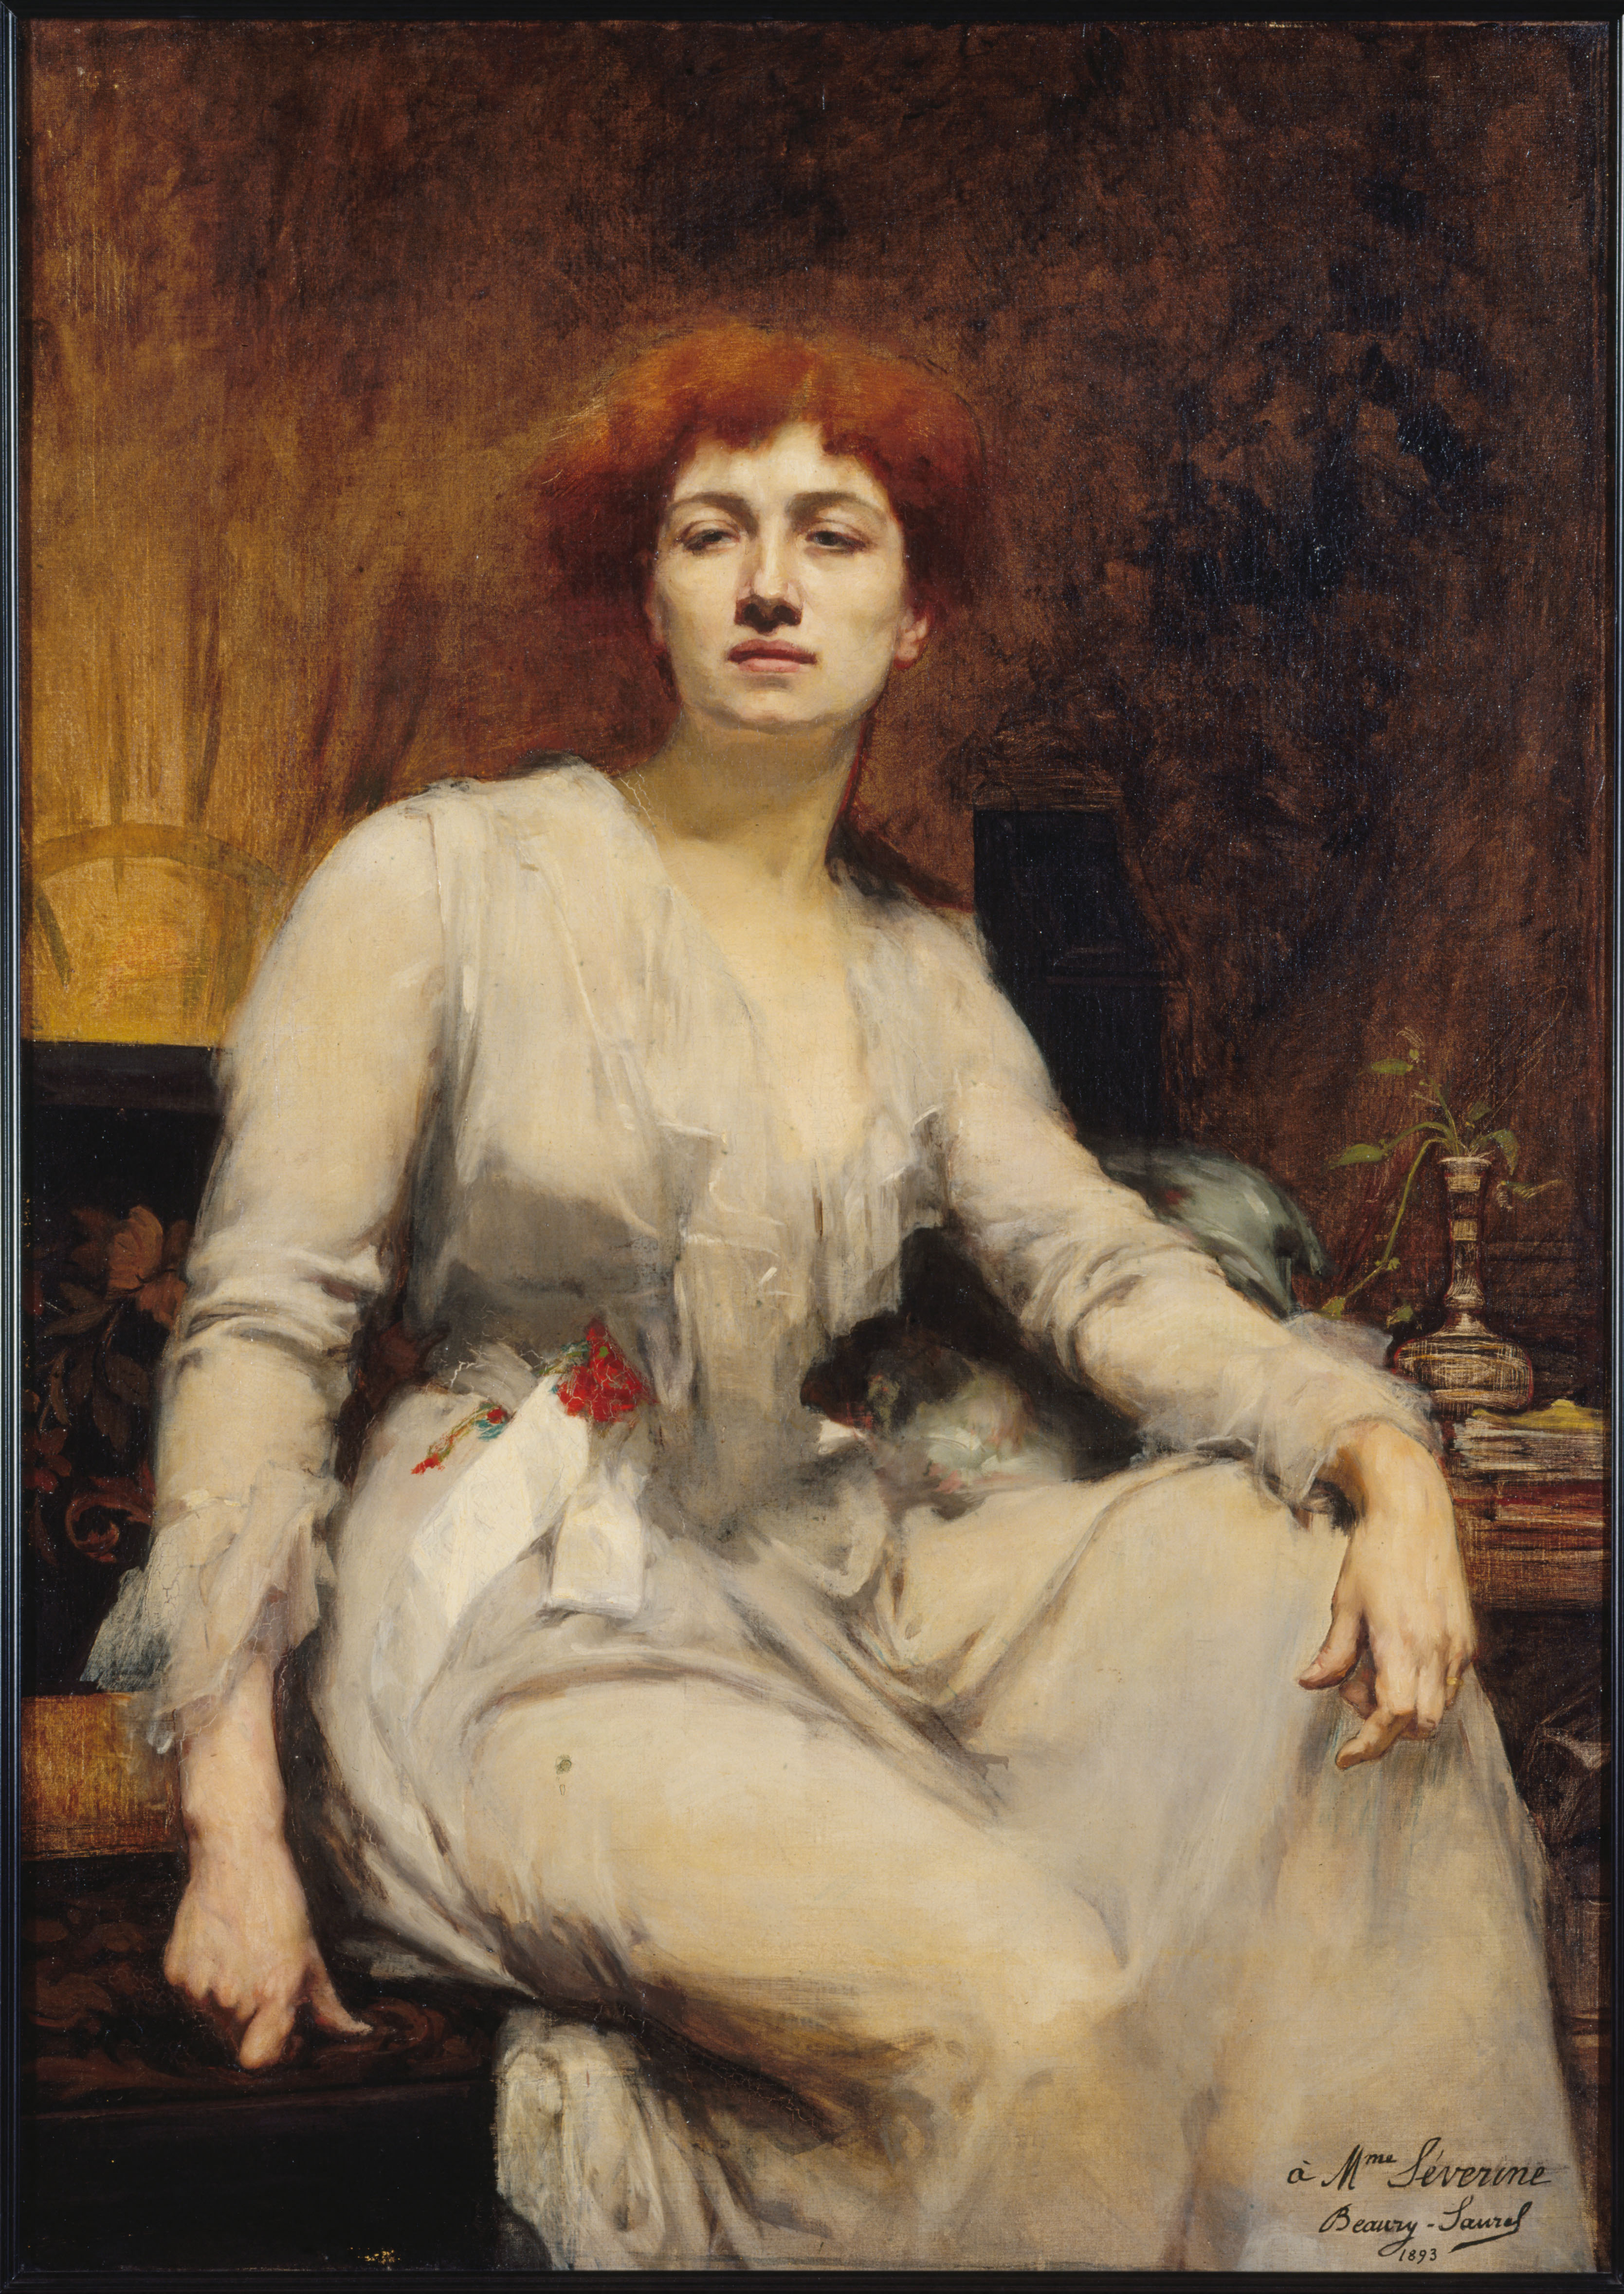 Séverine by Amélie Beaury-Saurel - 1893 - 122.5 x 88 cm Musée Carnavalet